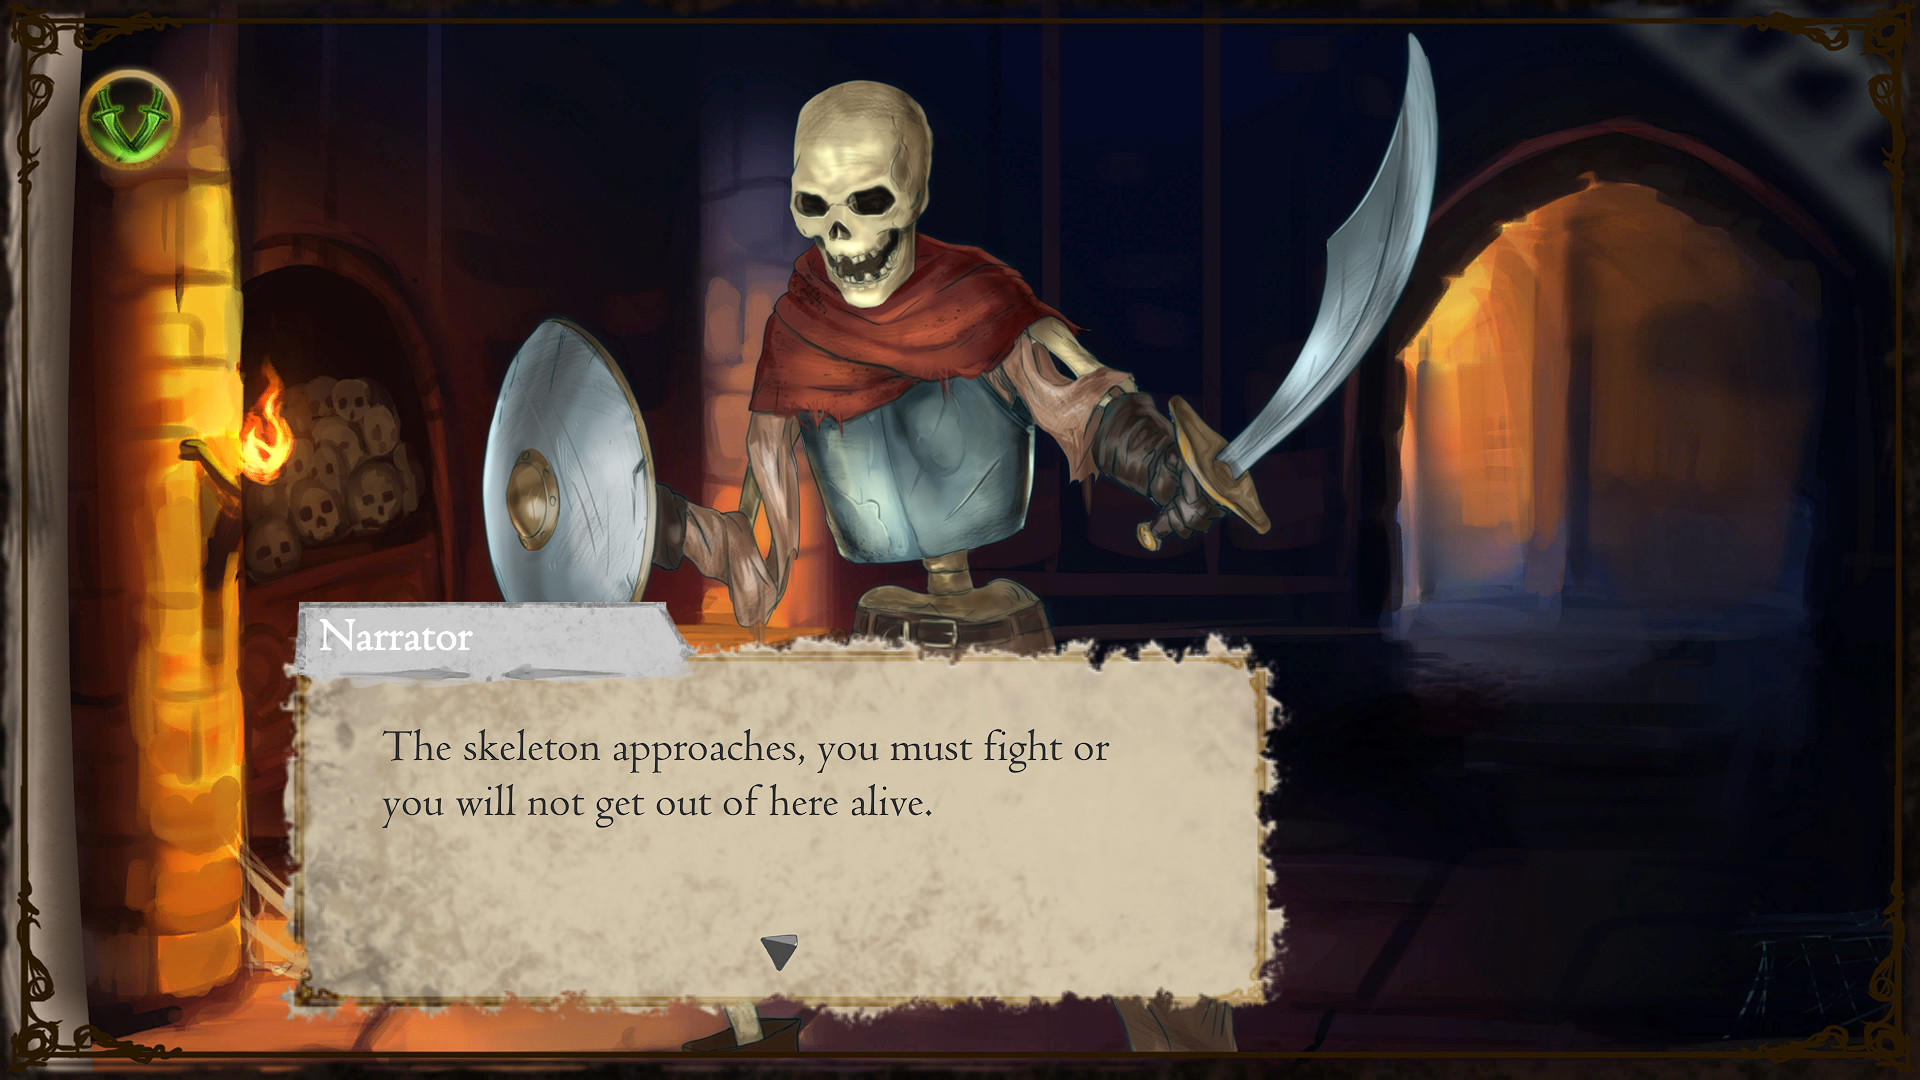 Screenshot of Grave Knight